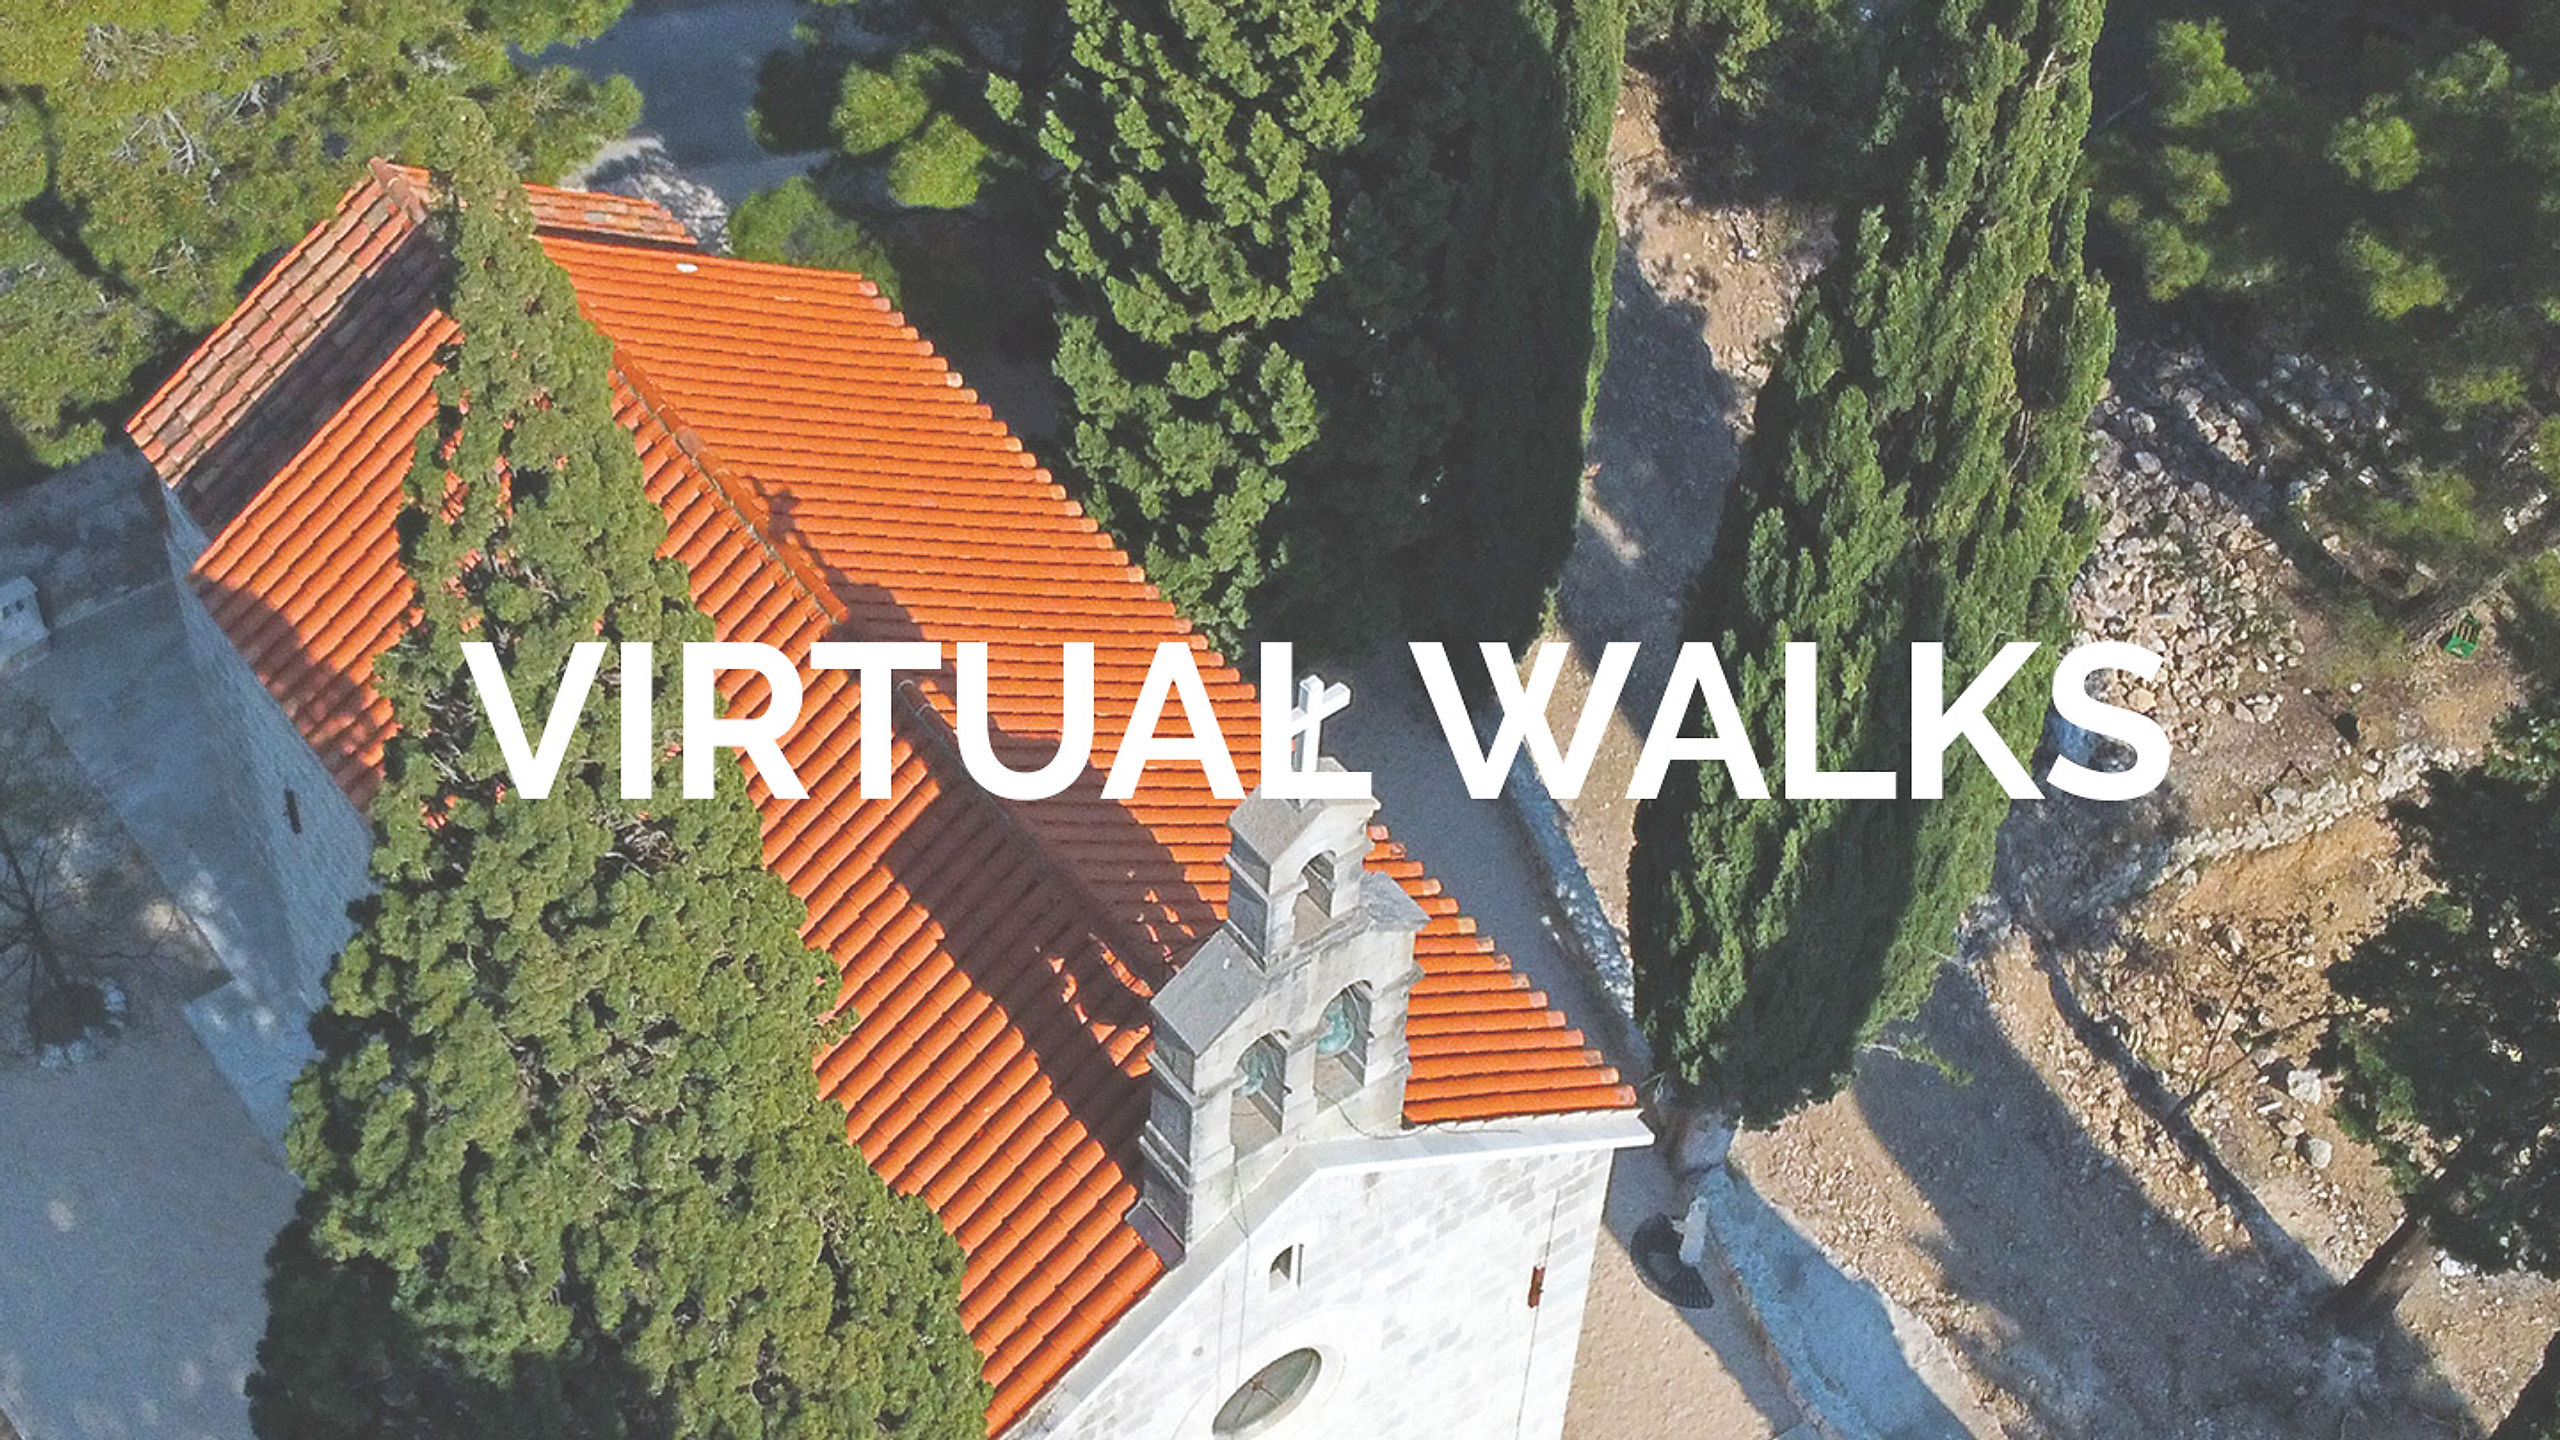 Virtual walks